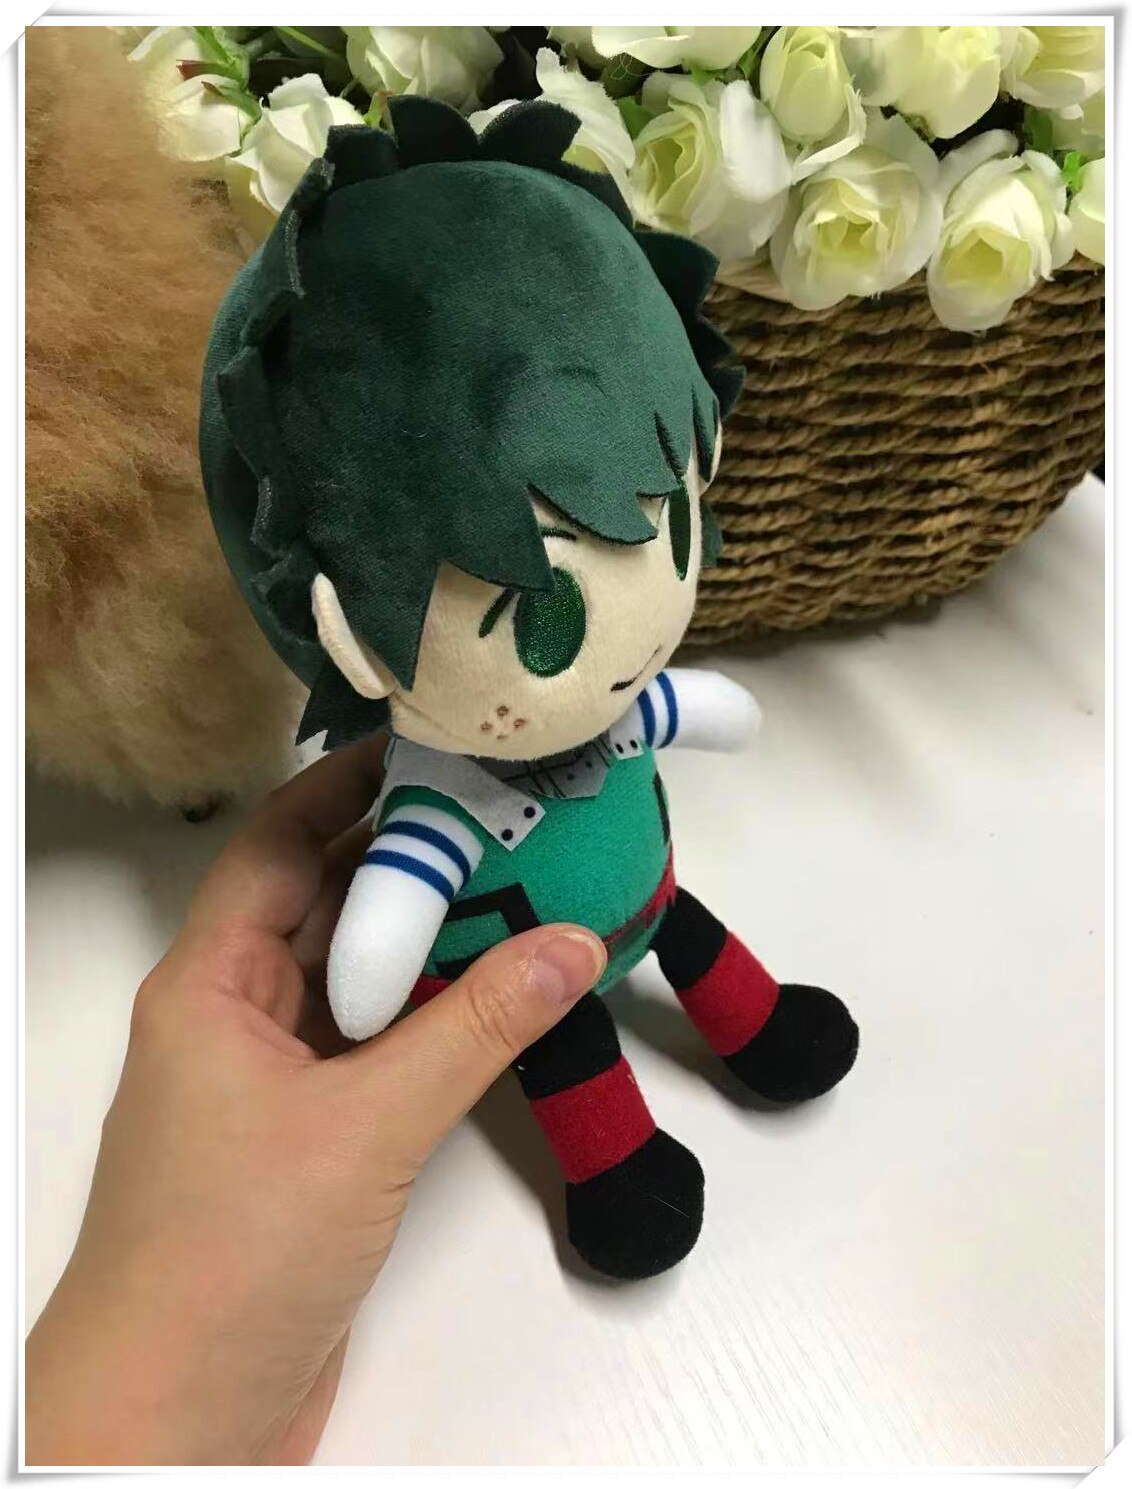 Anime My Hero Academia Midoriya Izuku 20cm Doll Stuffed Toy Soft Plush #8687 Children Christmas Gift